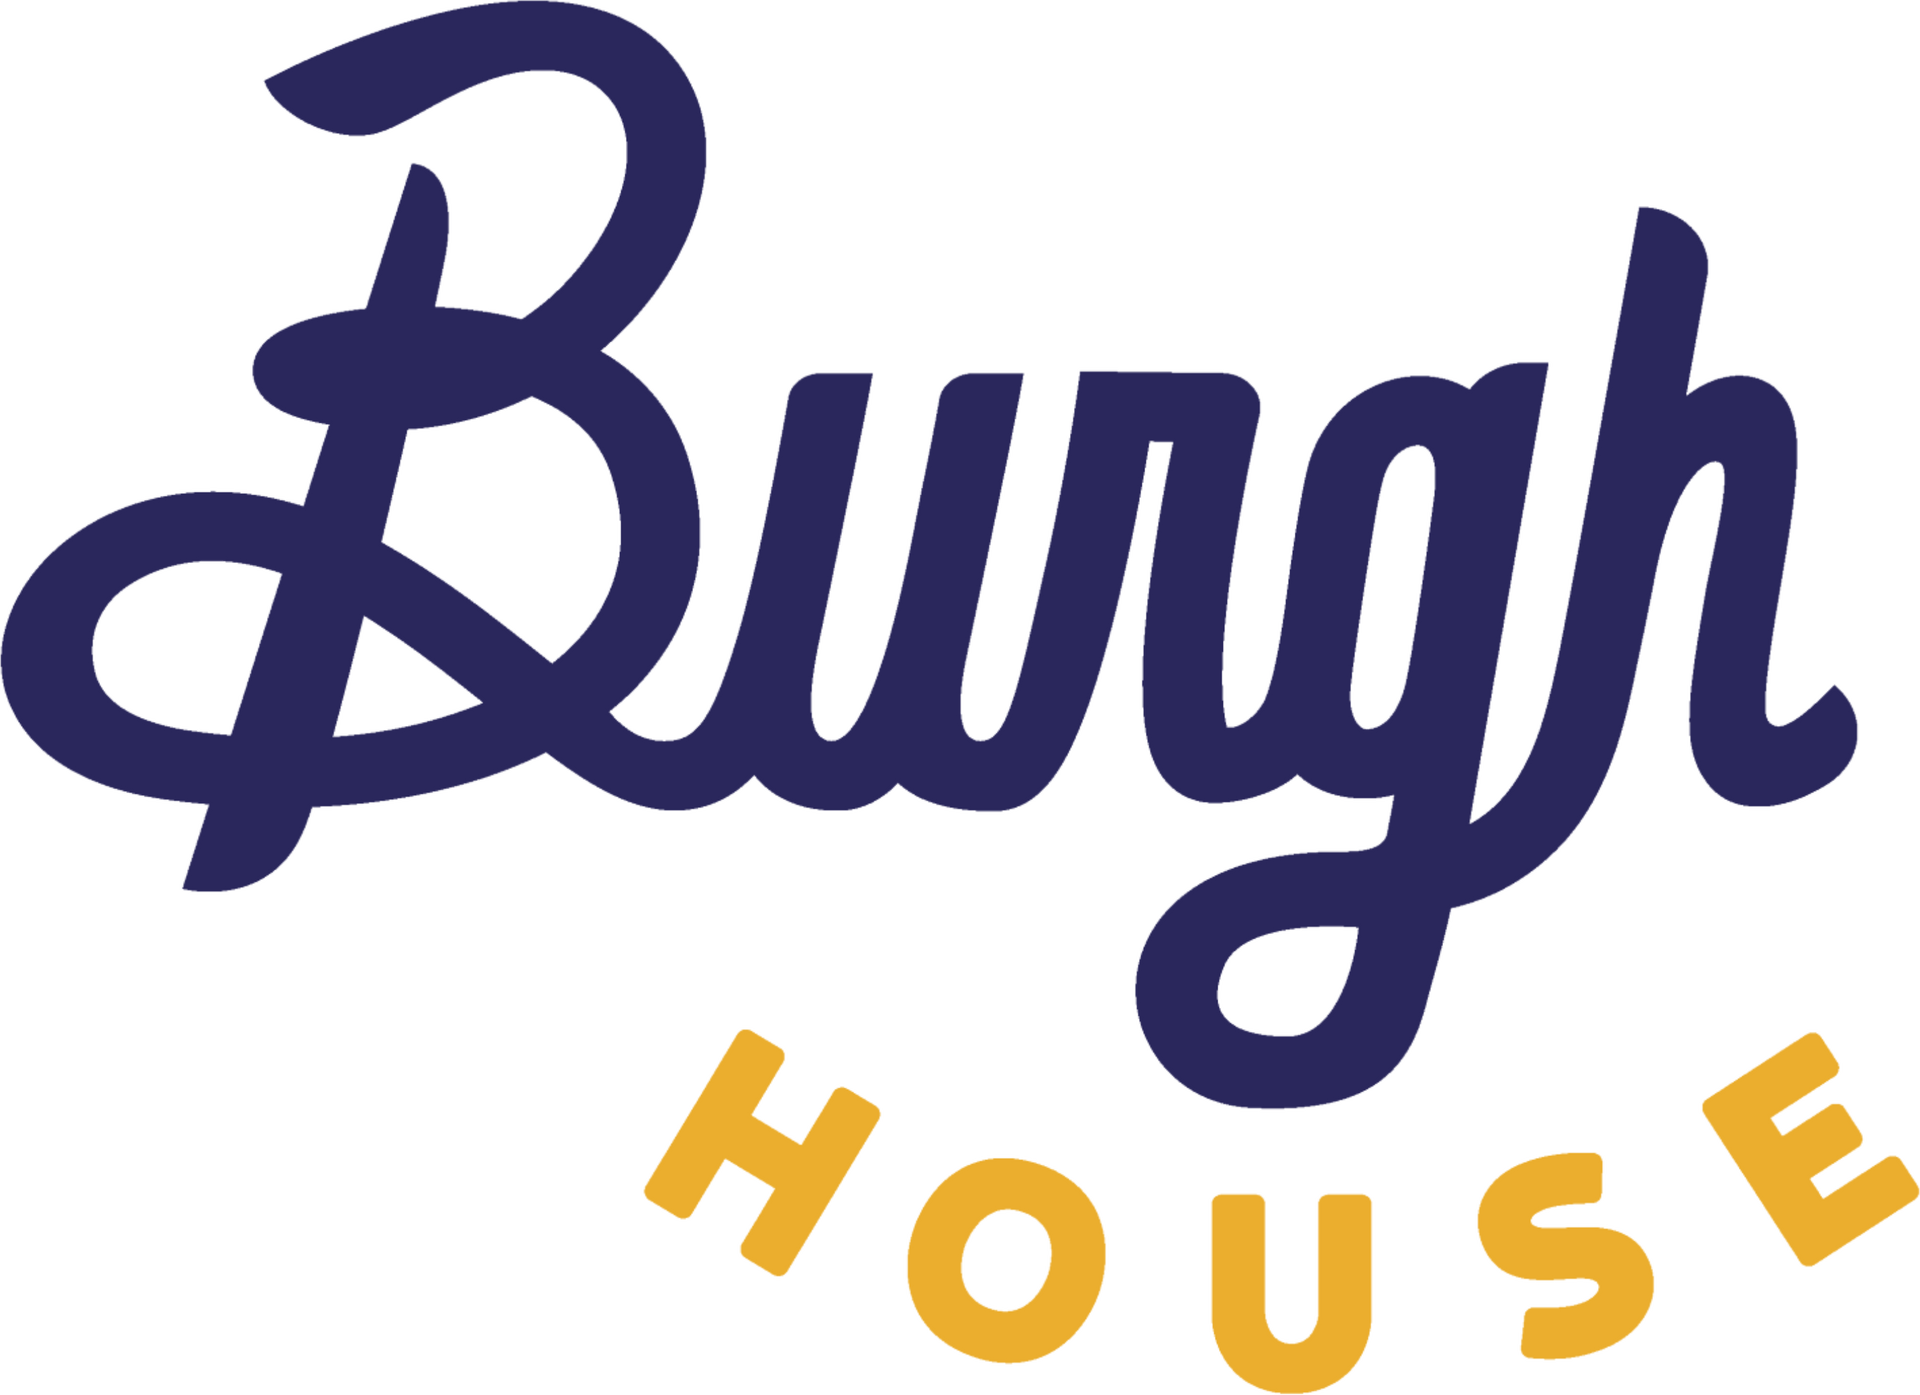 Burgh House & Family Entertainment Center Logo